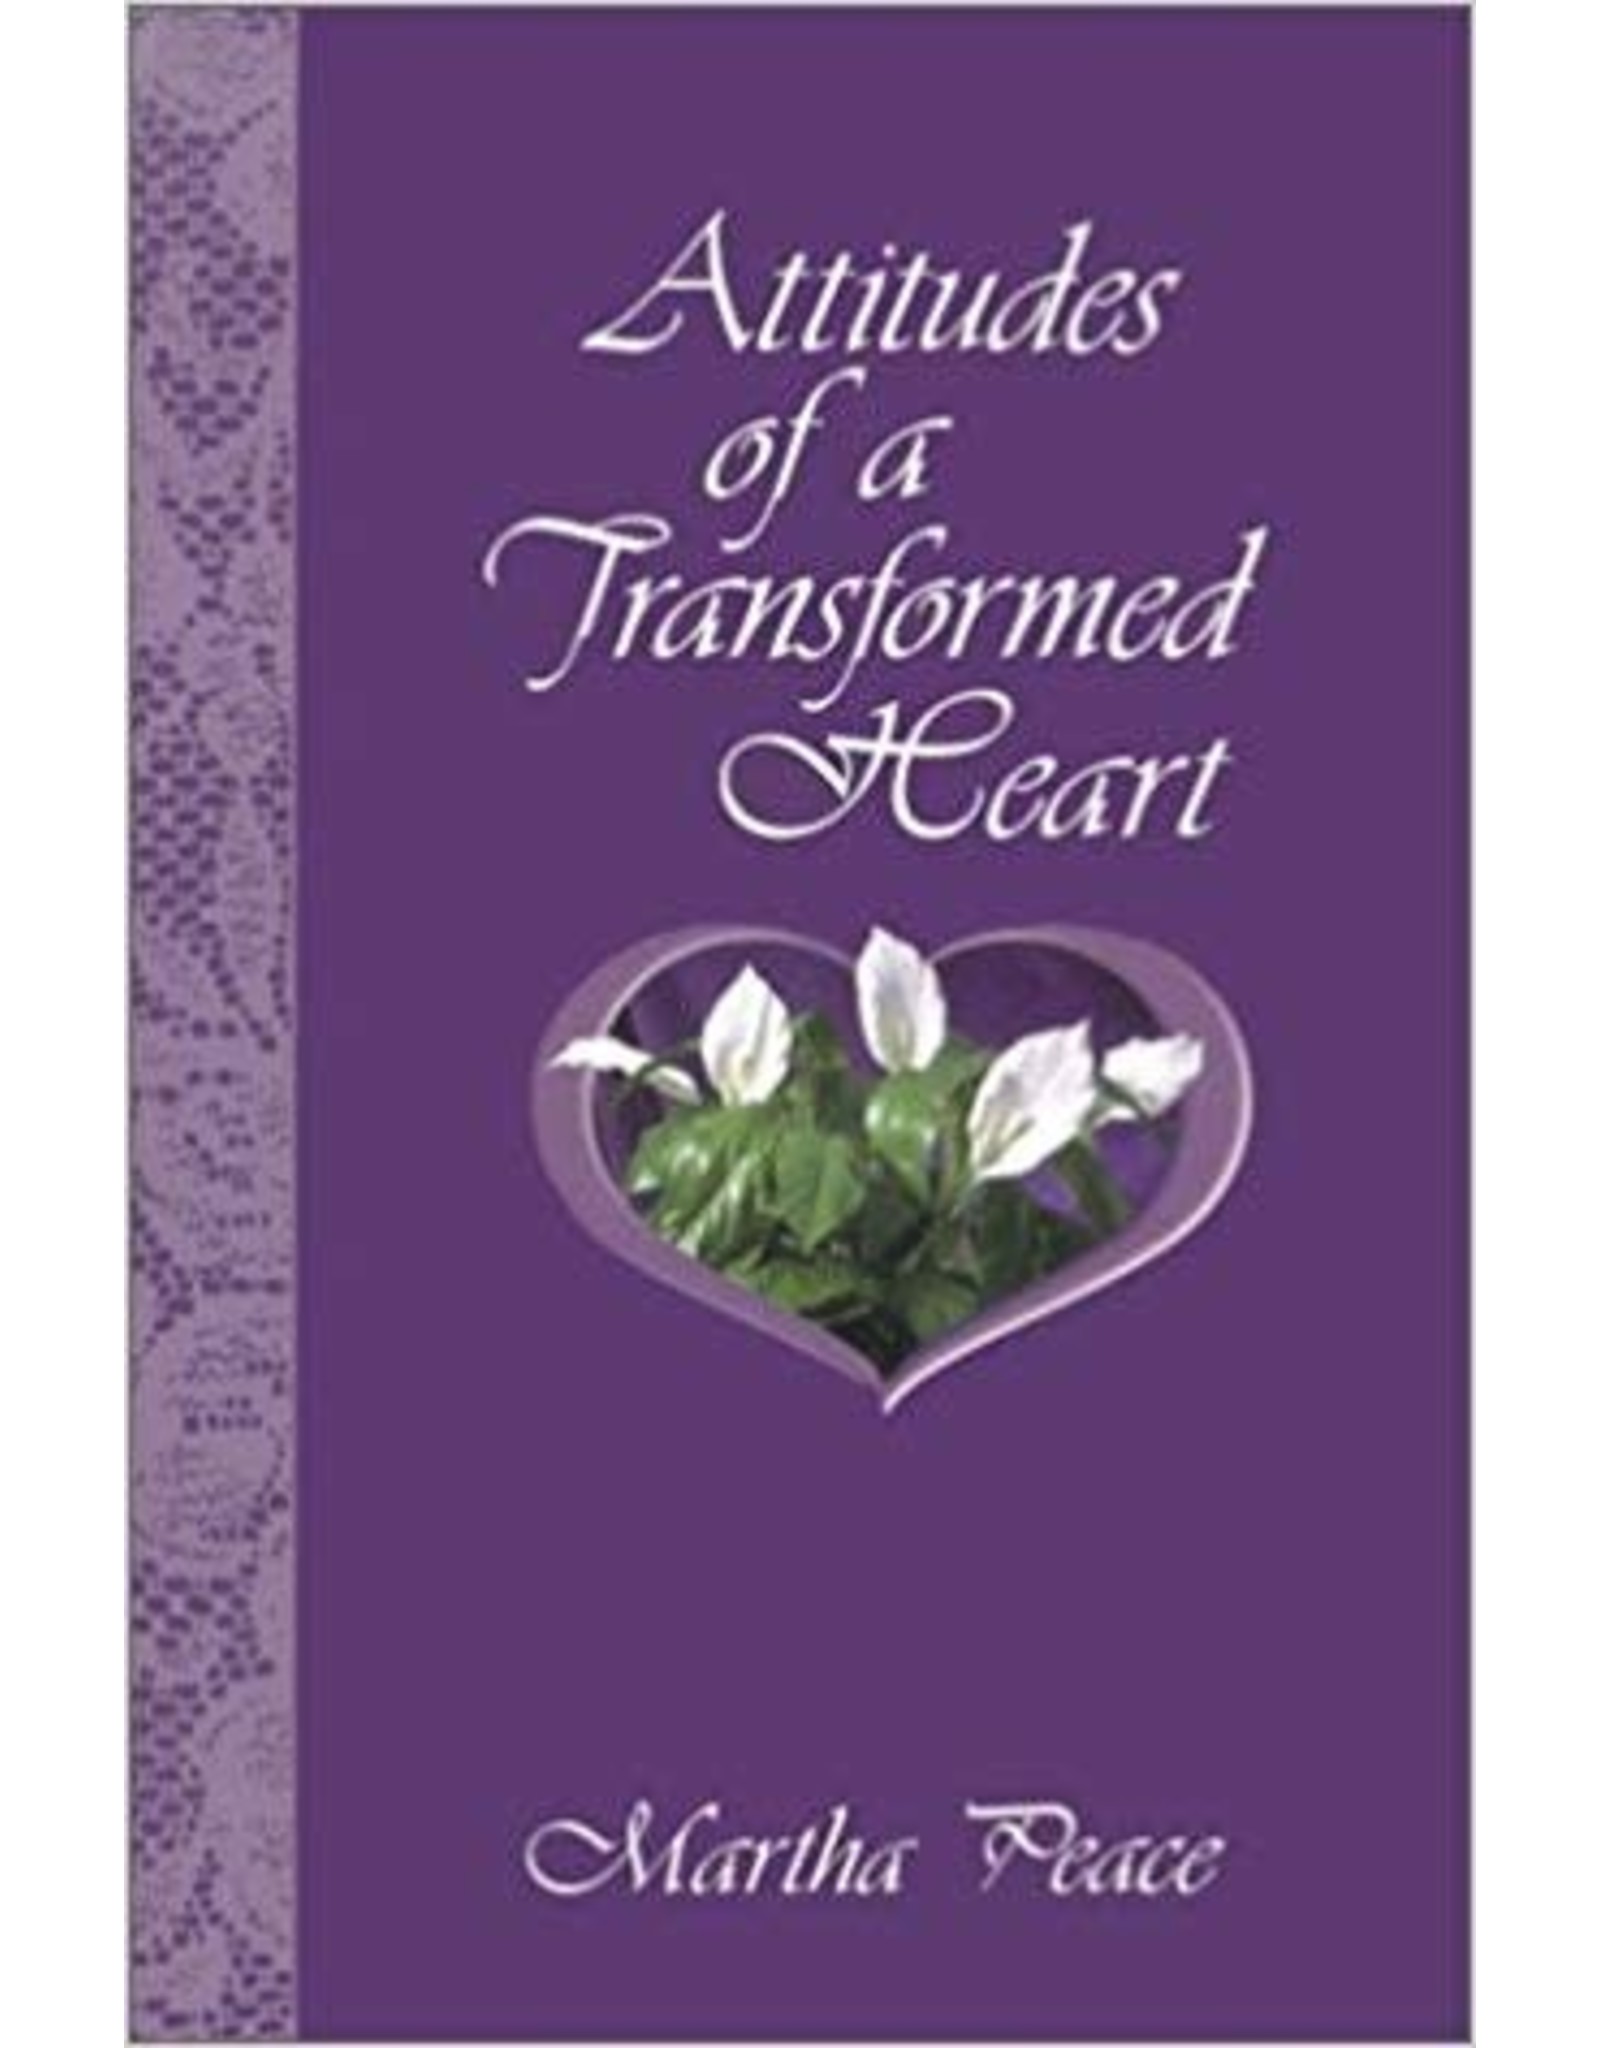 Martha Peace Attitudes of a Transformed Heart